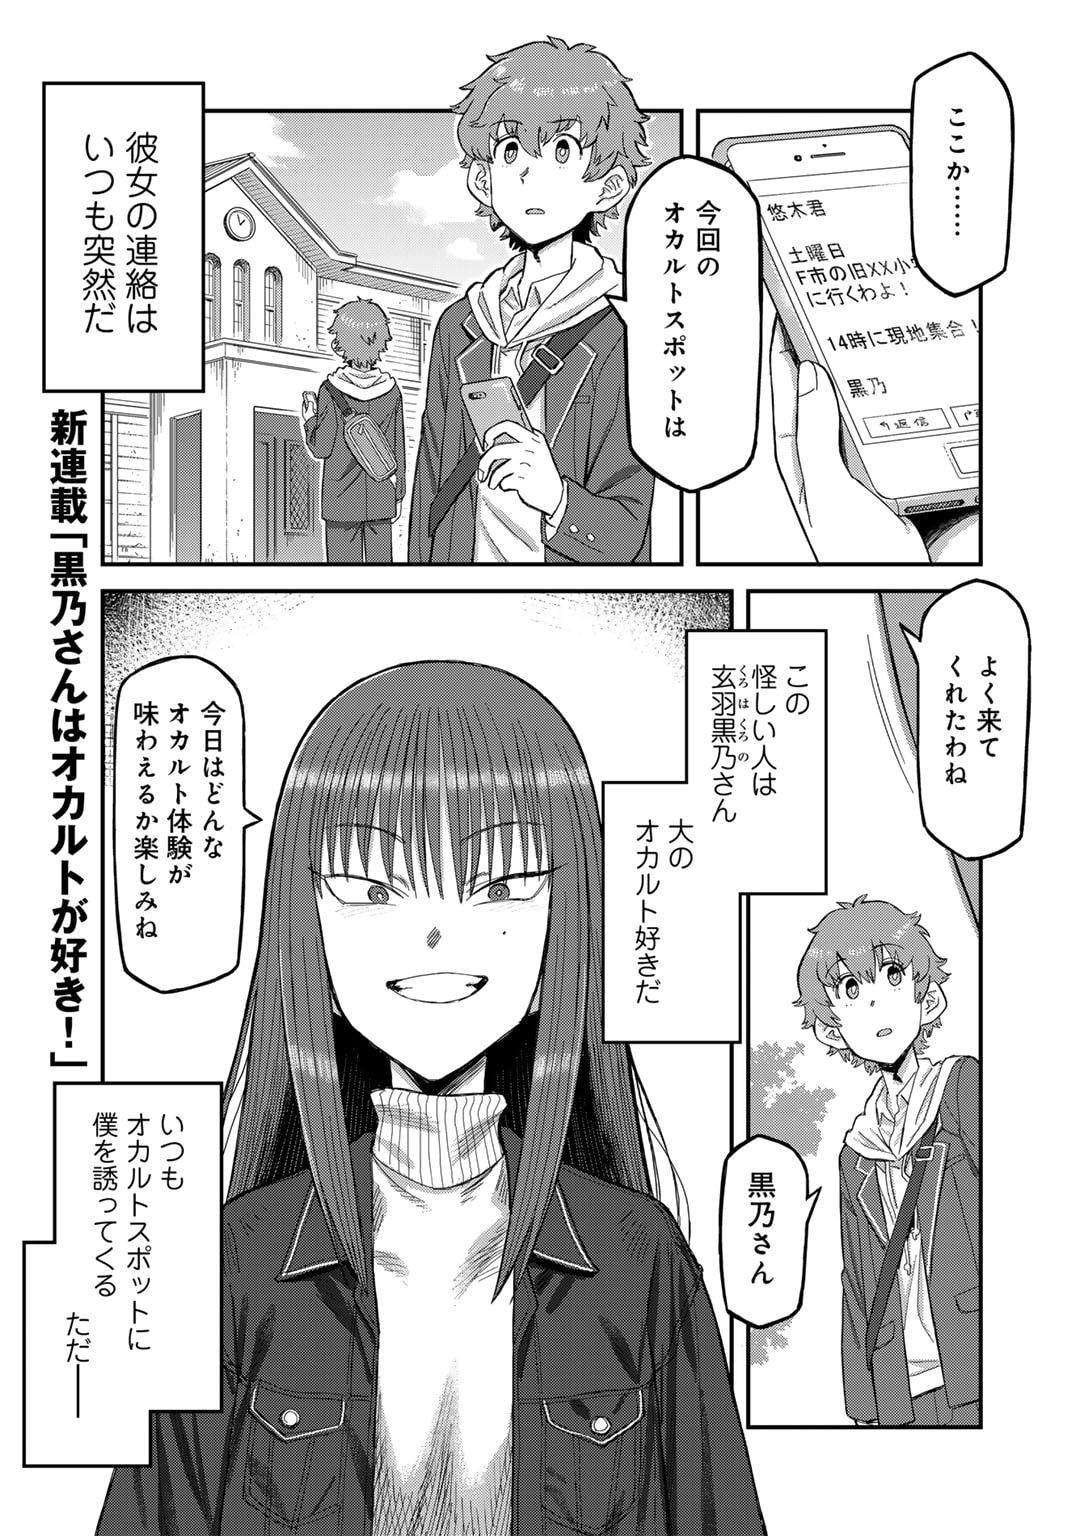 Kurono-san wa Occult ga Suki! - Chapter 1 - Page 1